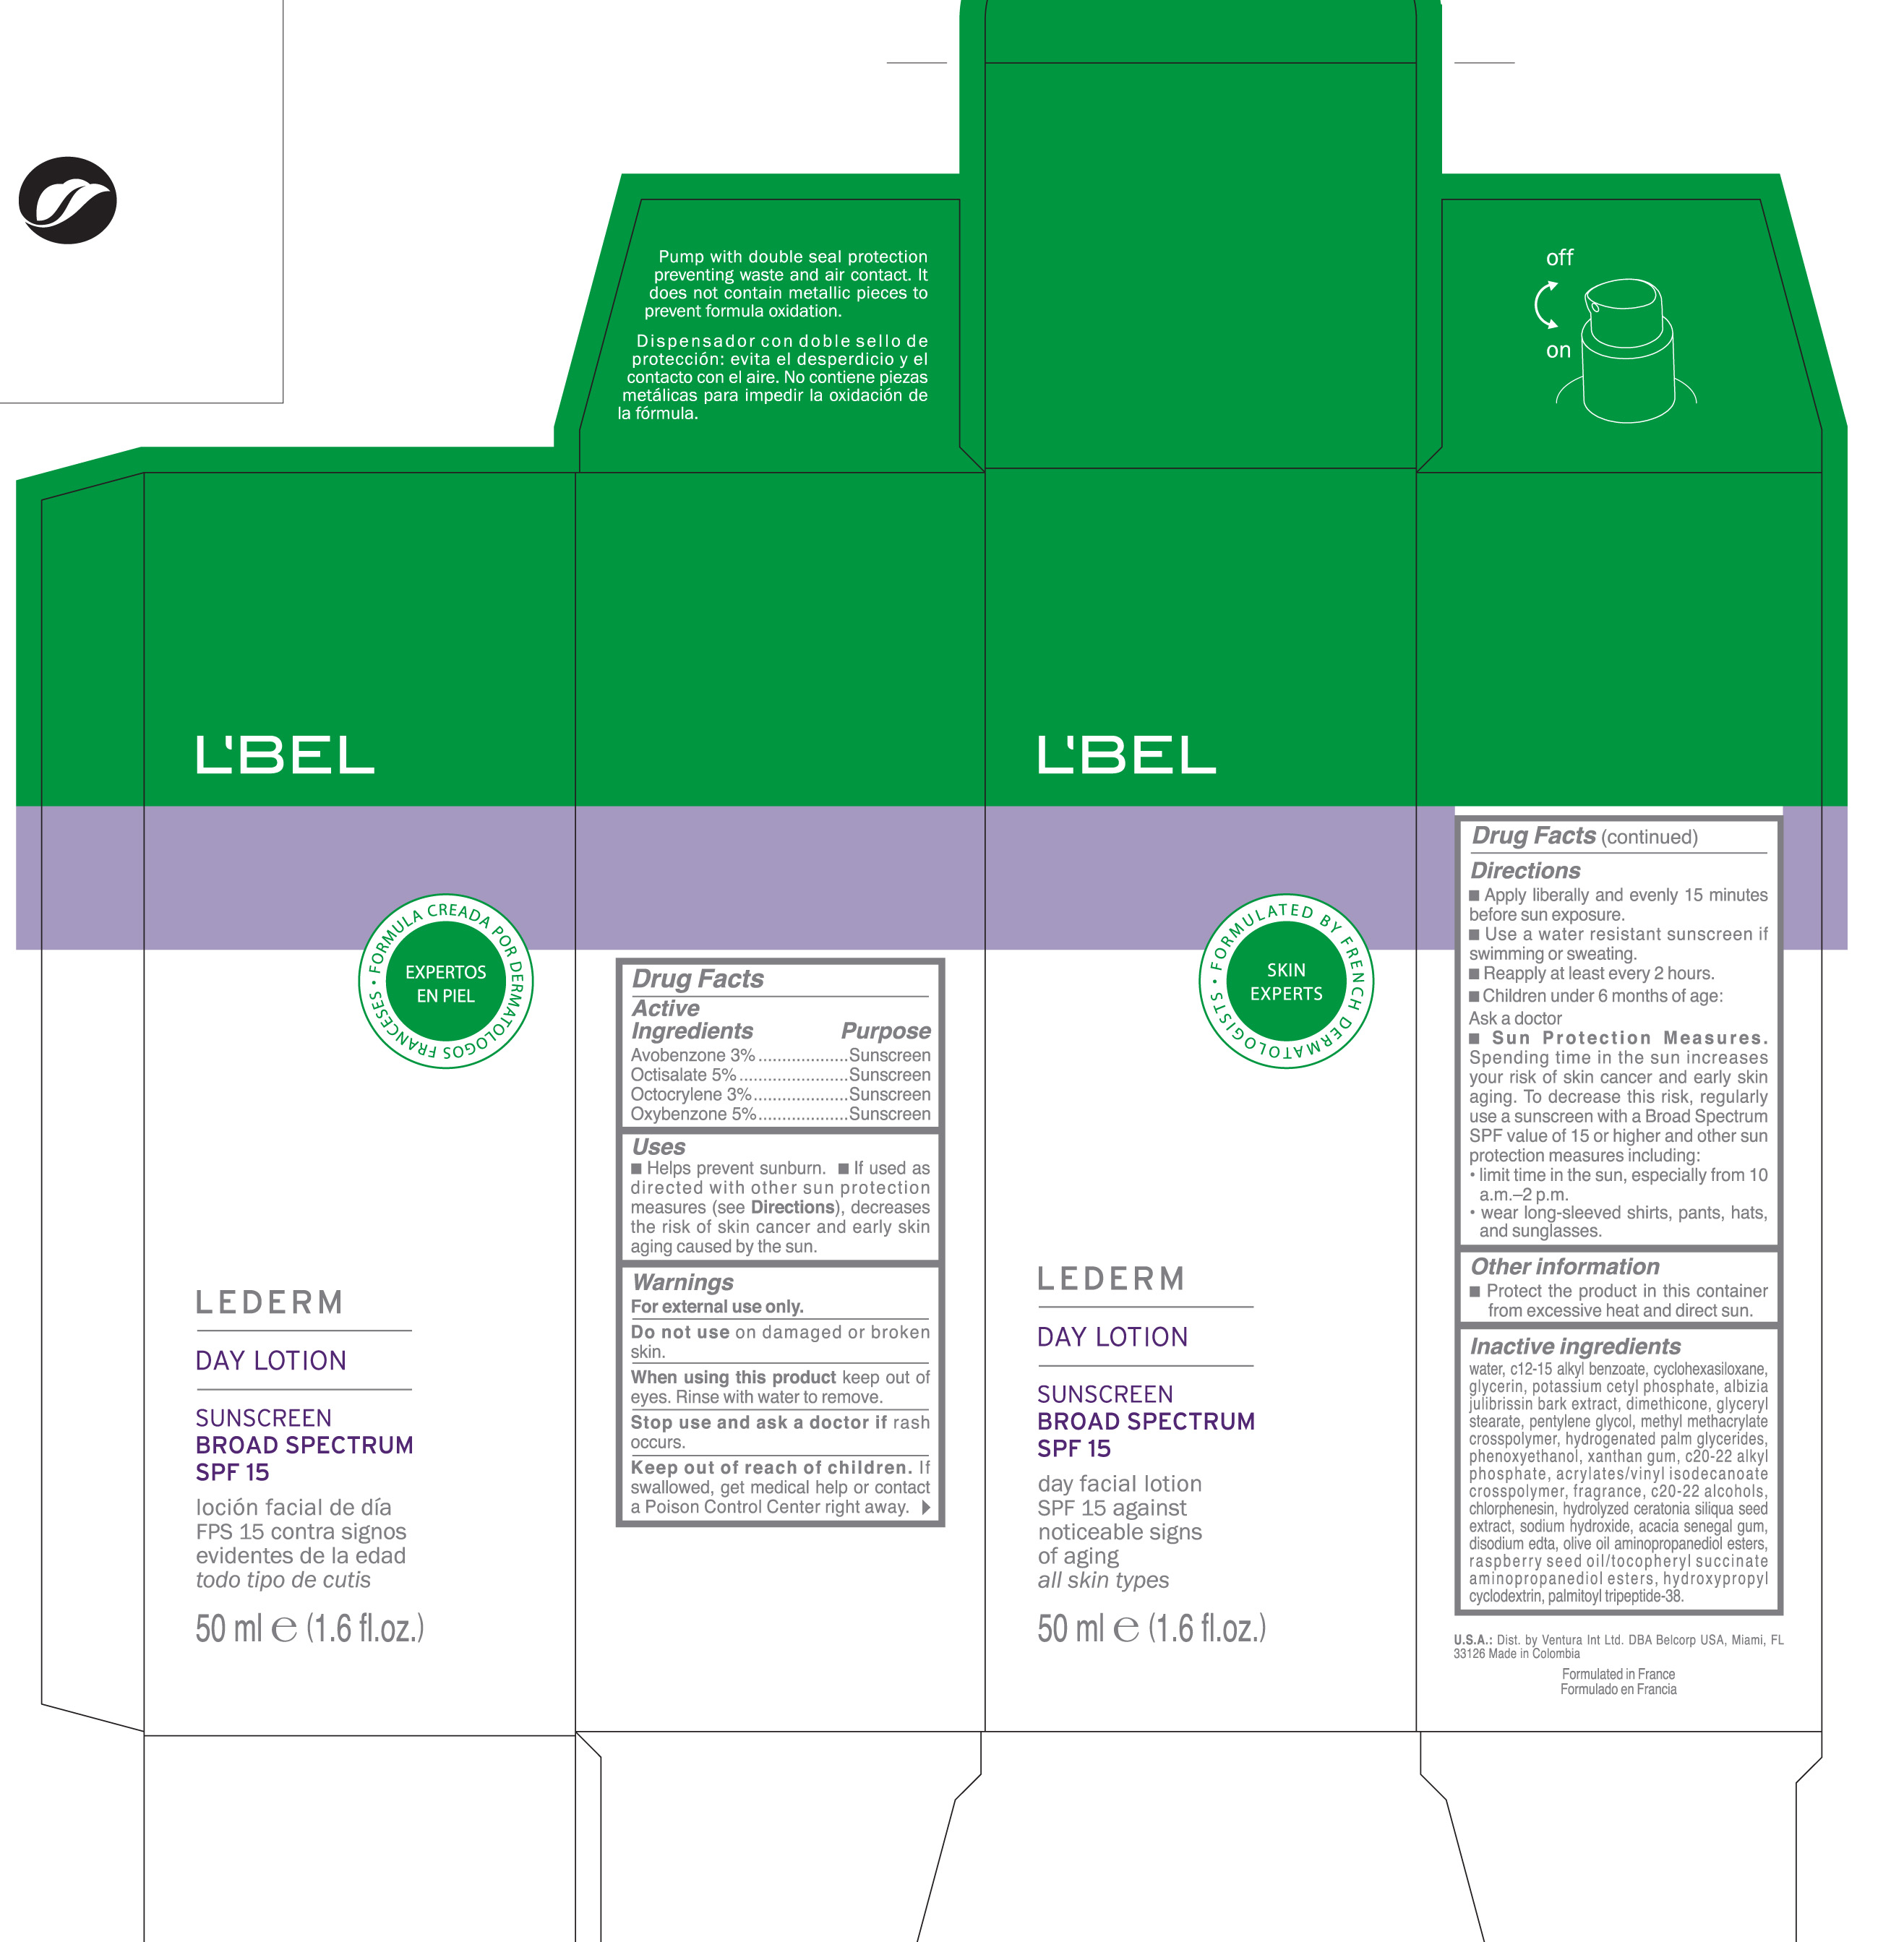 PRINCIPAL DISPLAY PANEL - 50 ml Bottle Box